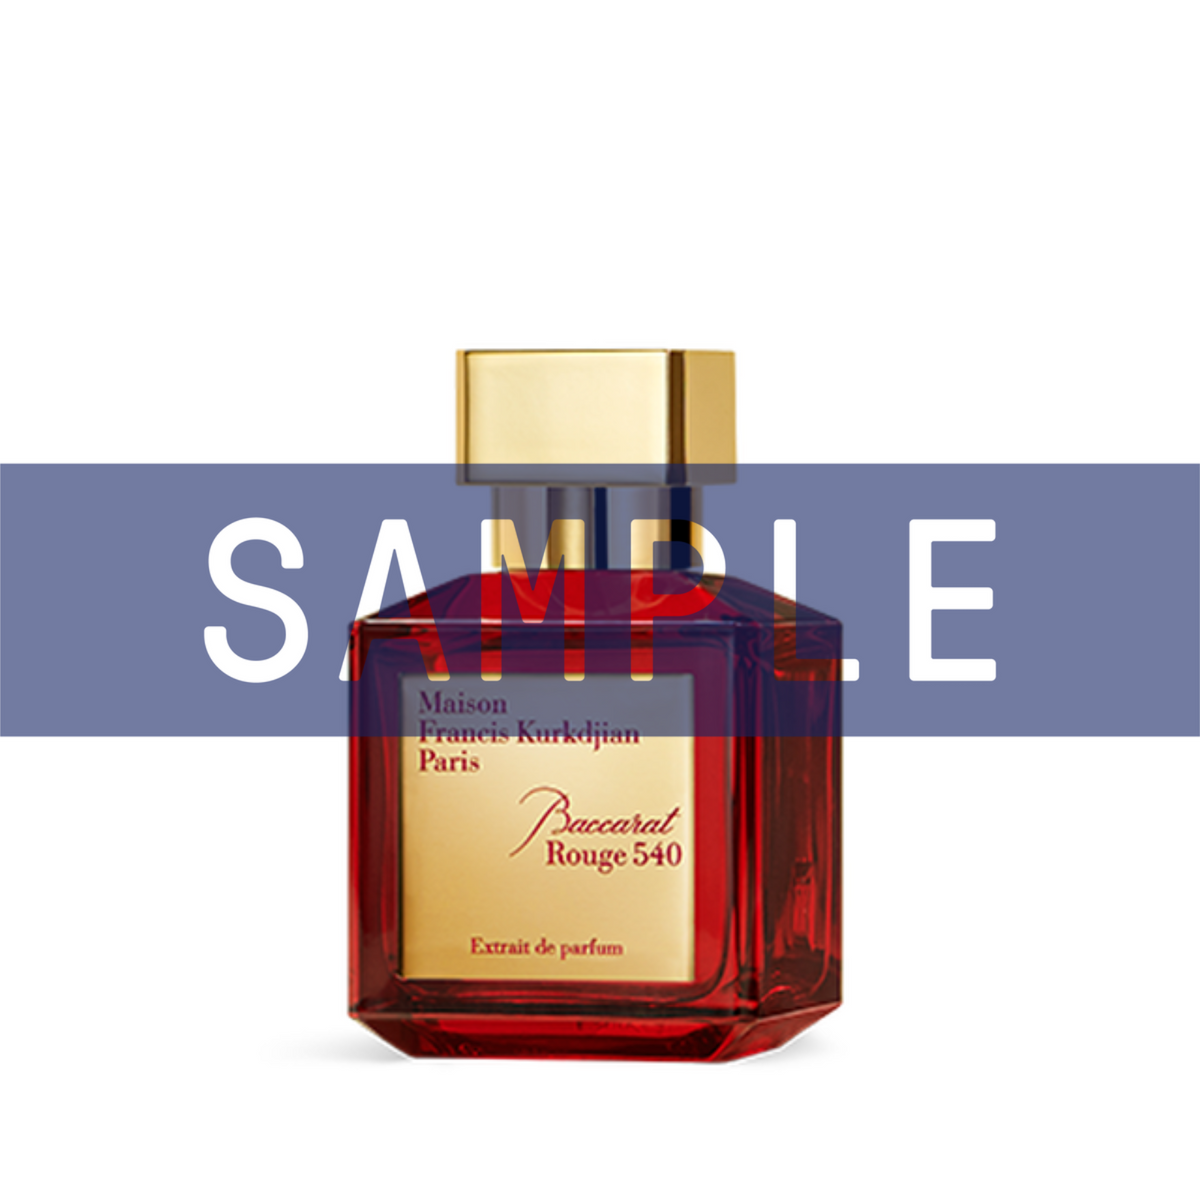 Primary Image of Baccarat Rouge 540 Extrait de Parfum Sample